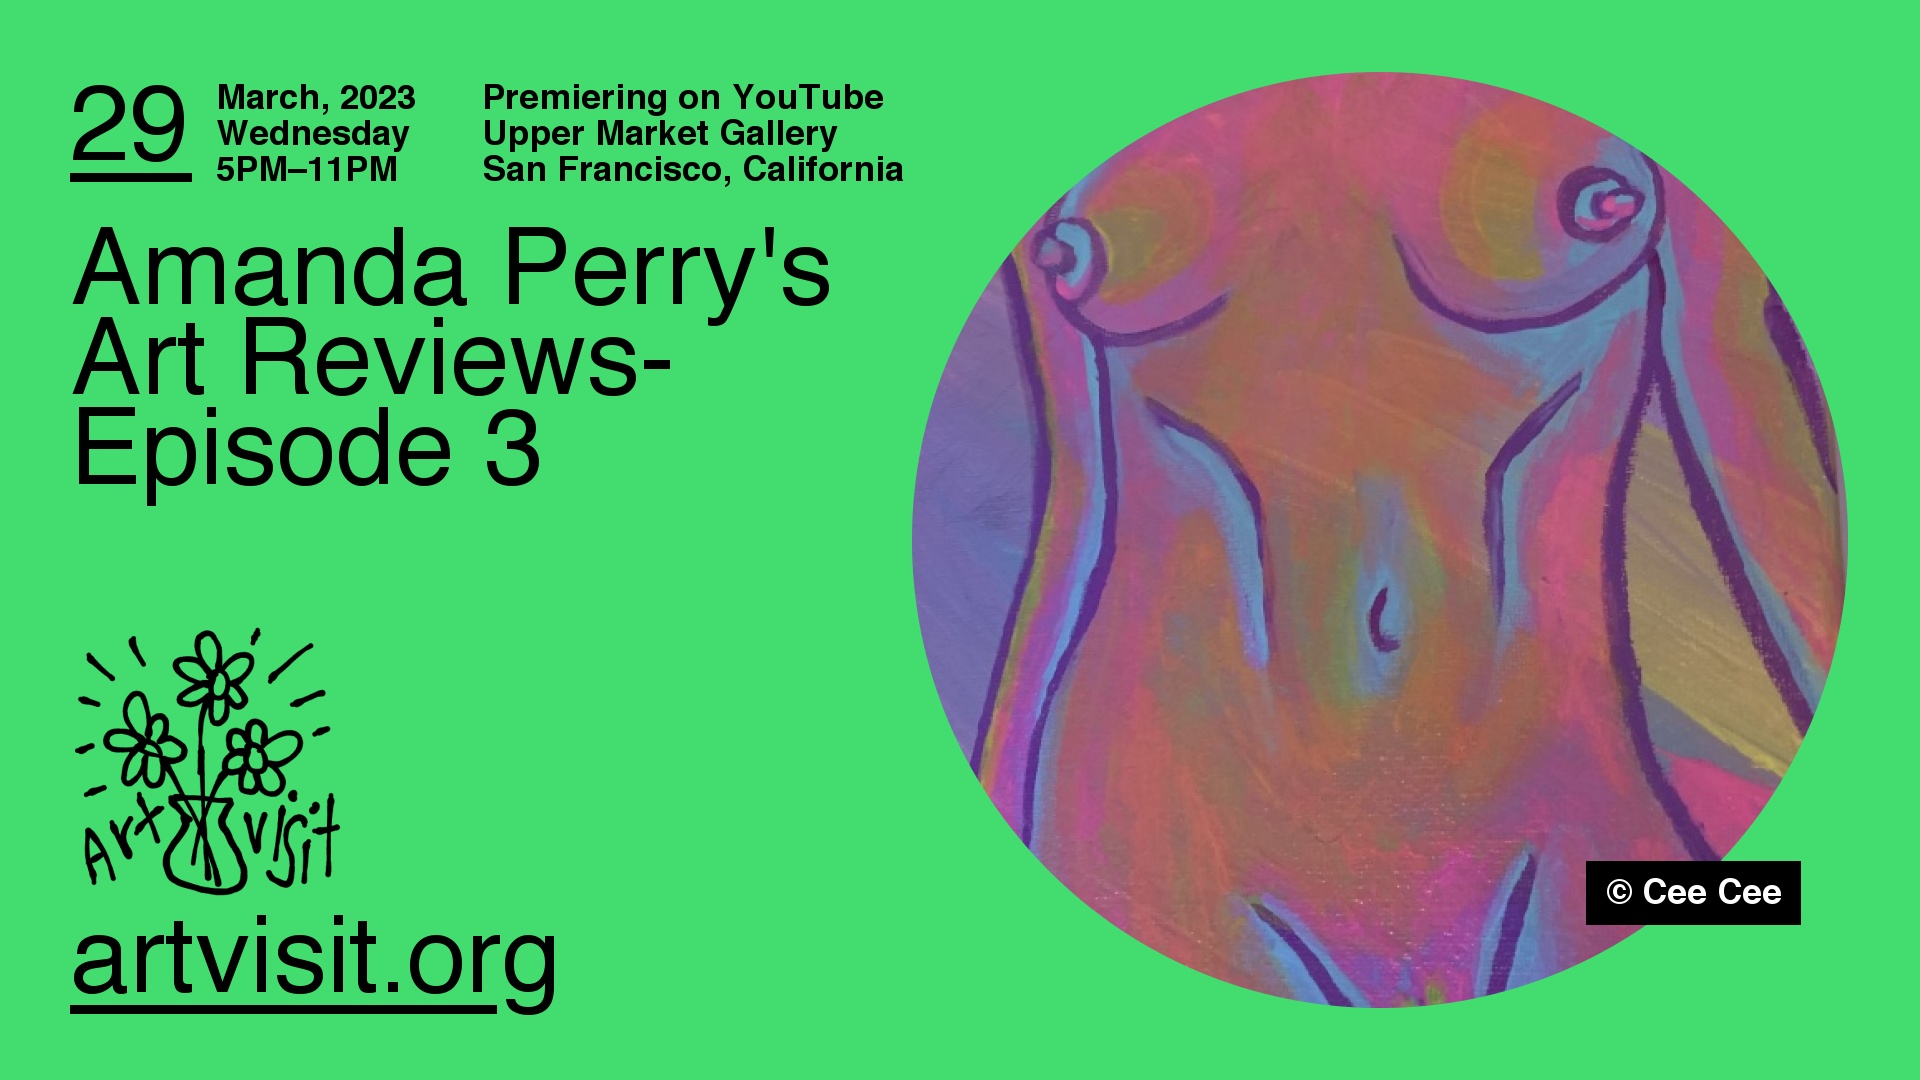 Amanda Perry's Art Reviews- Episode 3